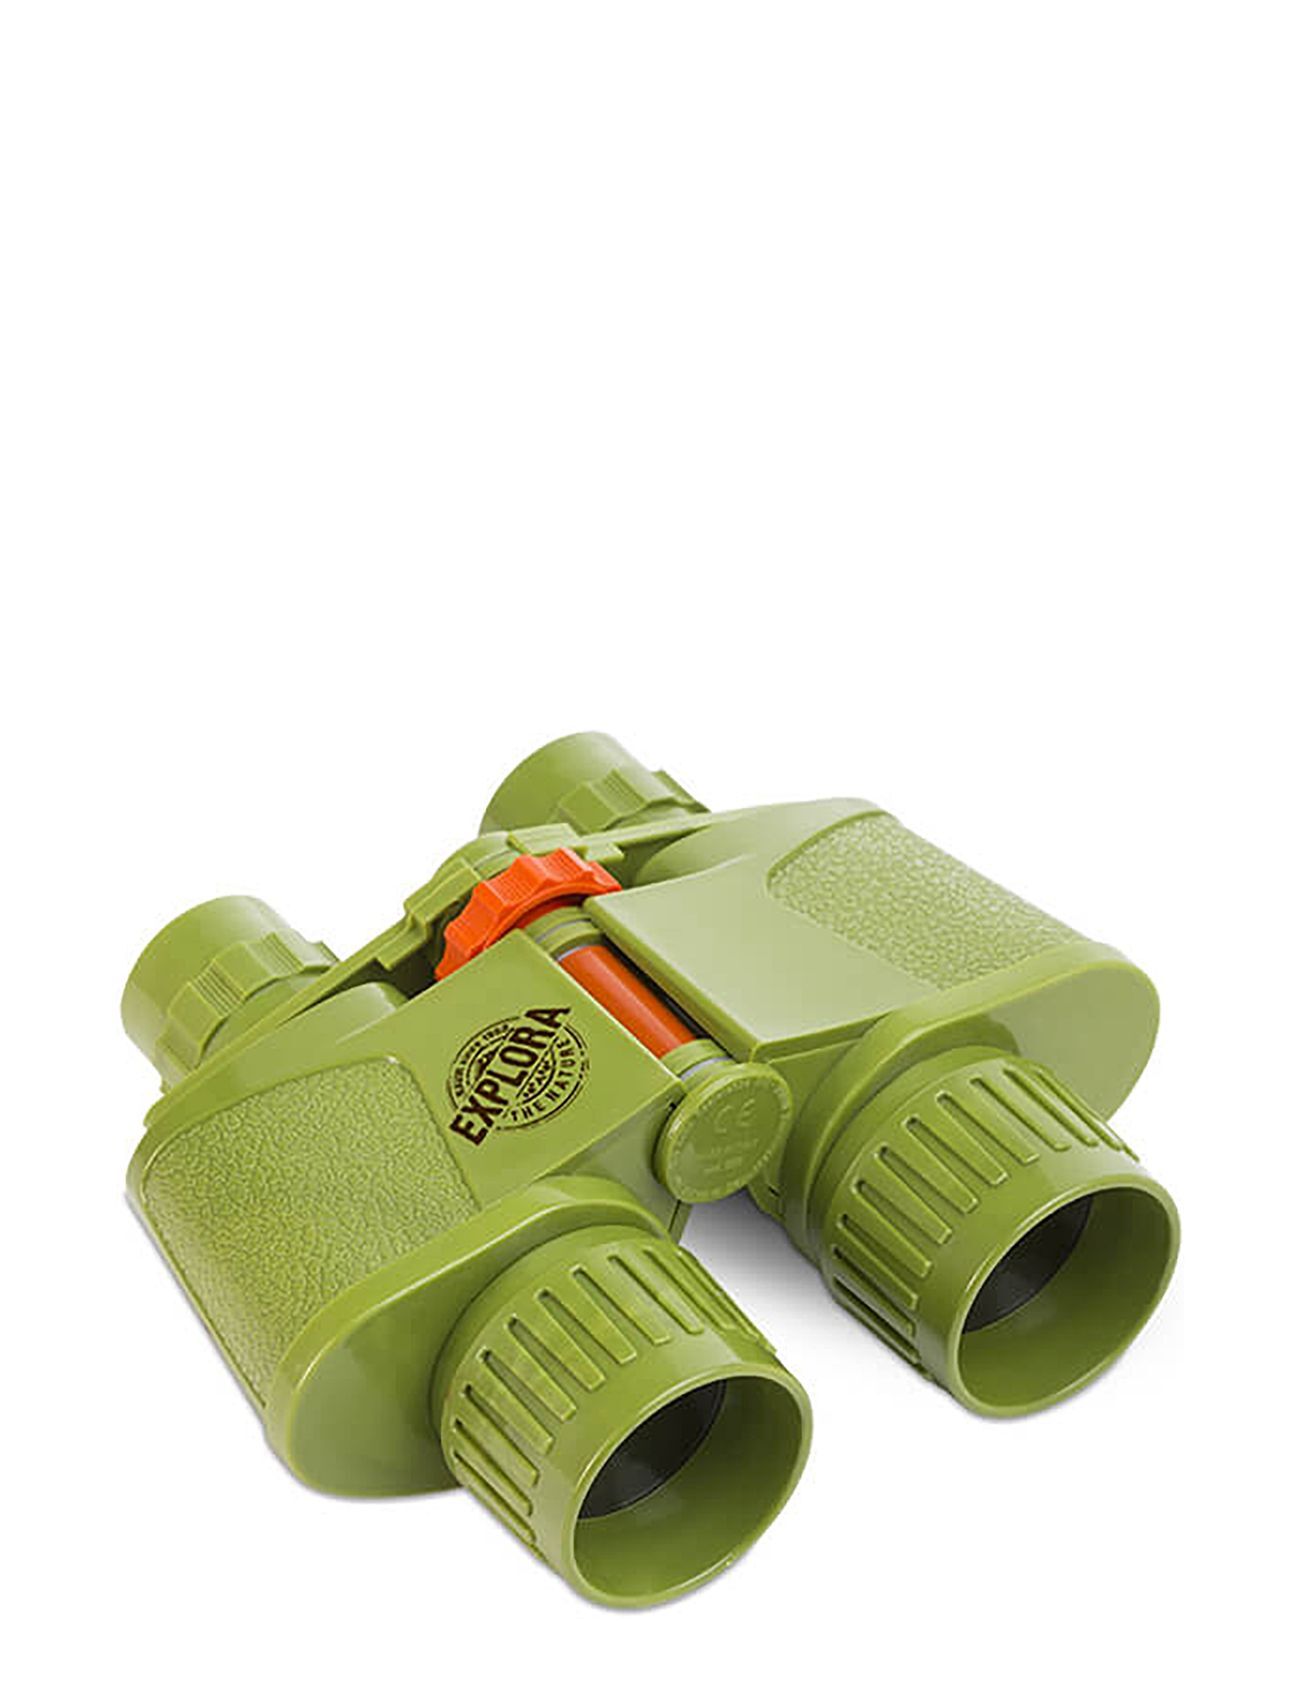 Magni Toys Binoculars With Neckstrap Toys Outdoor Toys Toy Tools Grønn Magni Toys